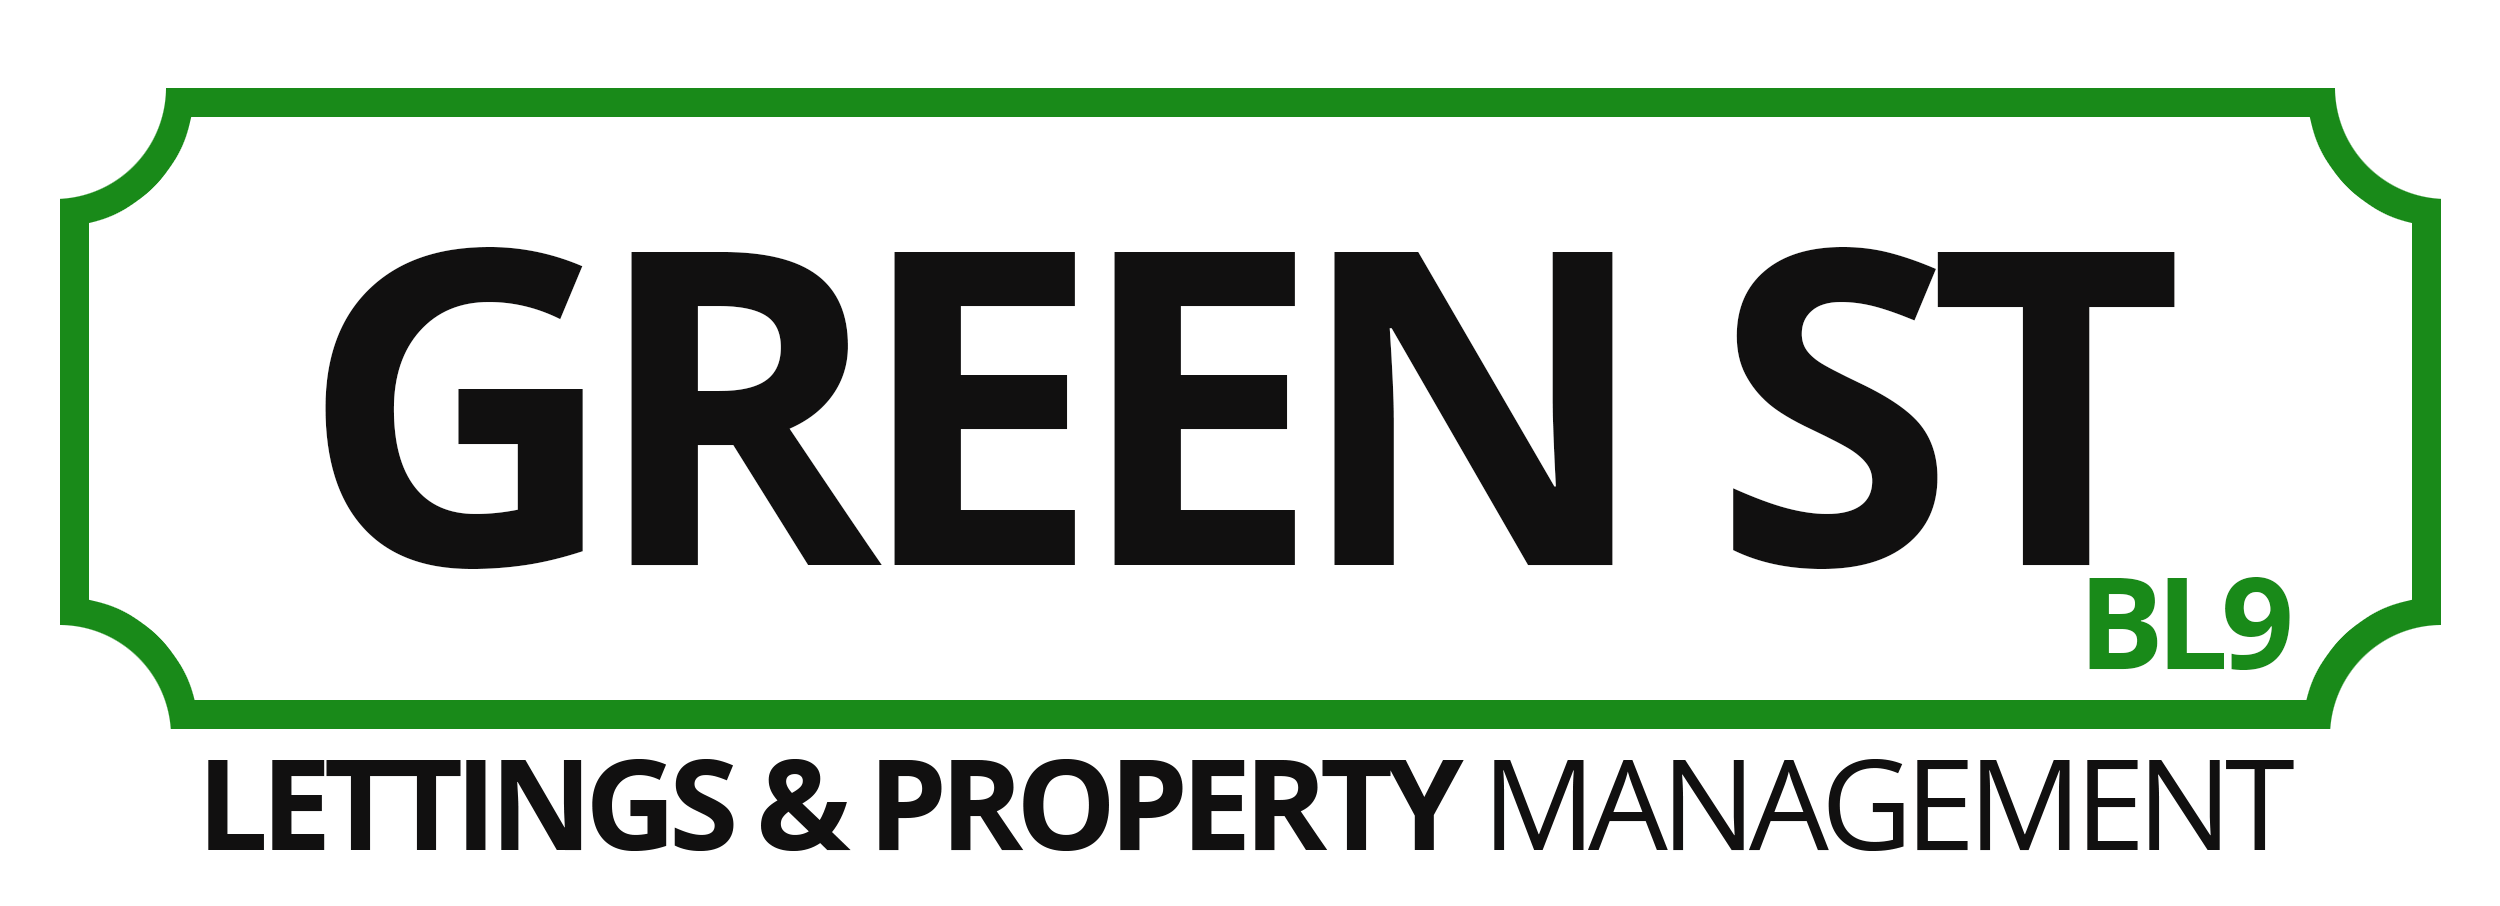 Green Street Logo - Green Street Property Management - Bury Business Directory